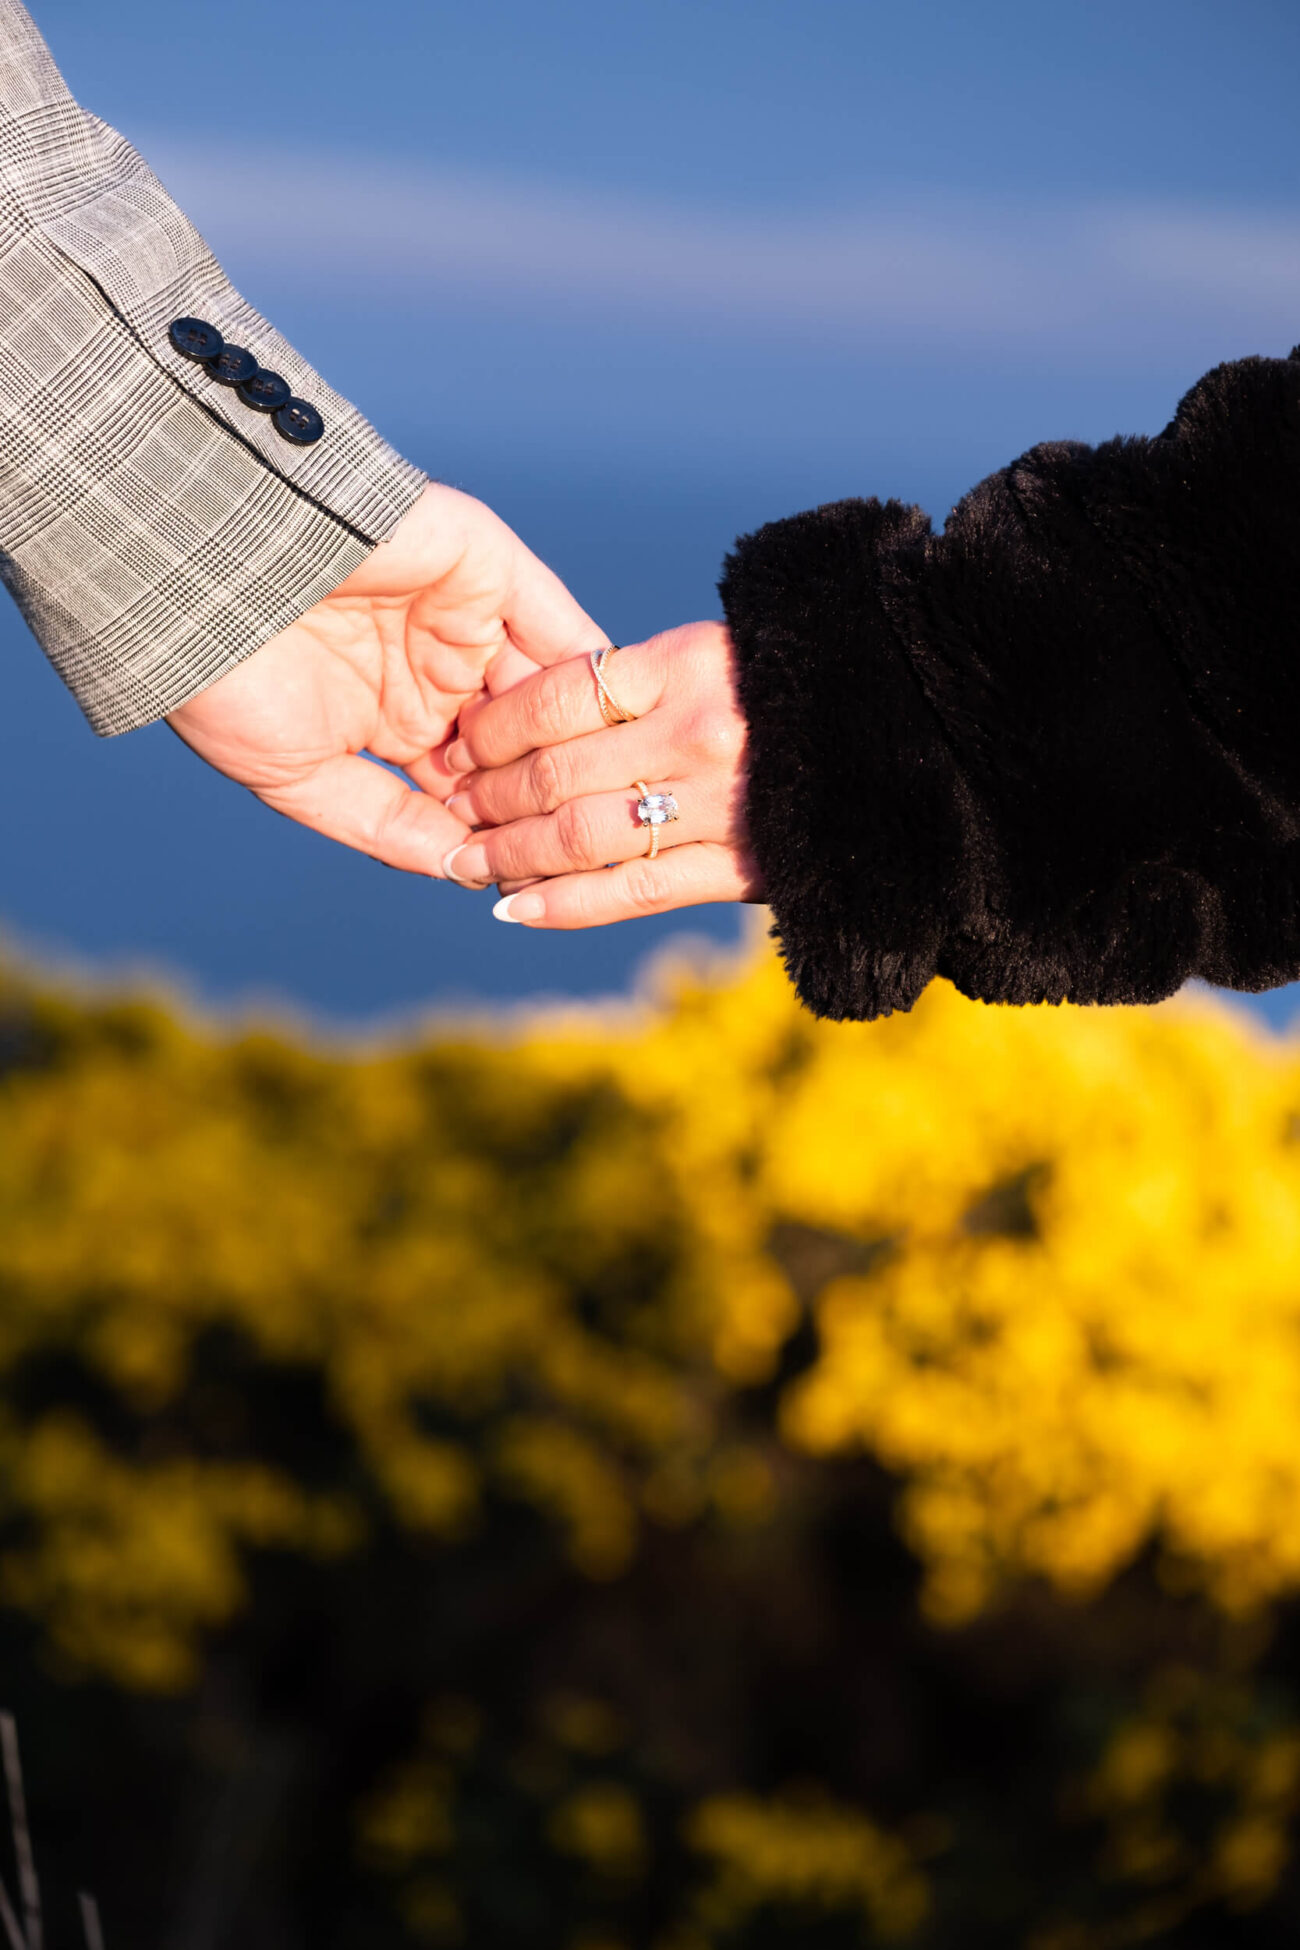 Howth Head engagement shoot, a secret proposal at Howth Head, hands holding with engagement ring